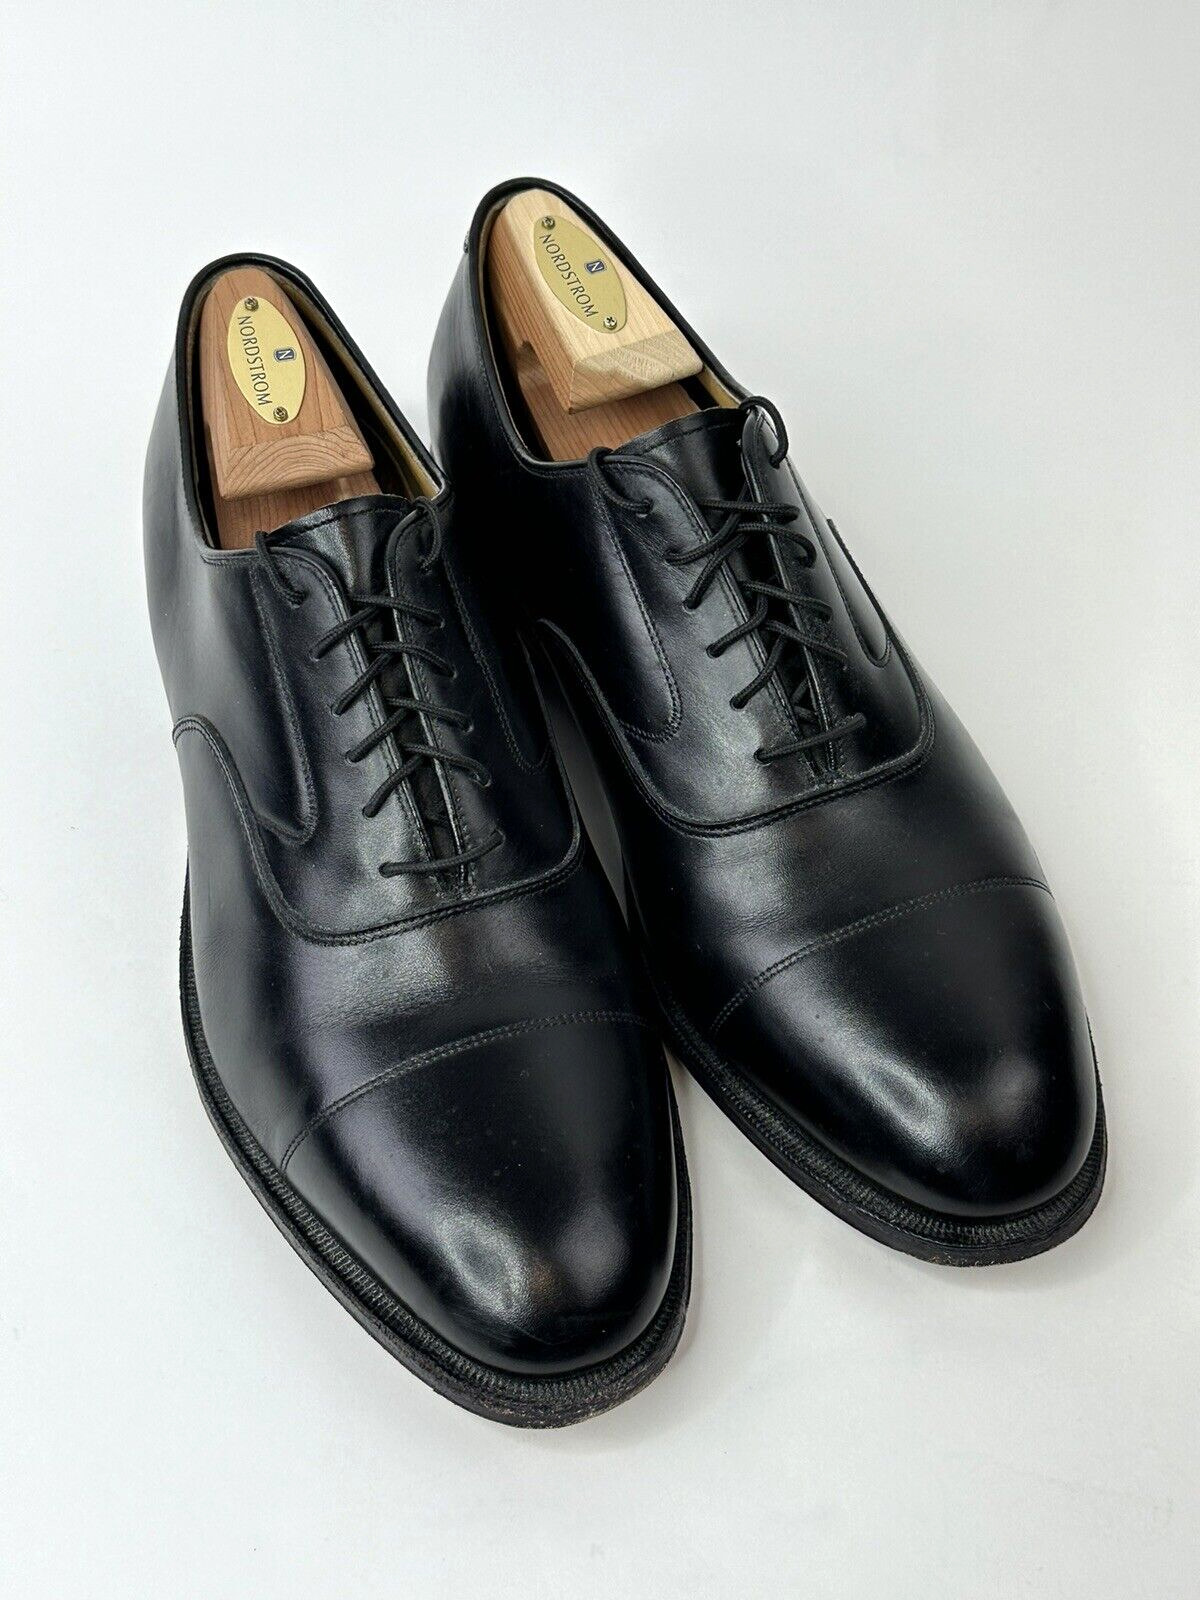 Johnston & Murphy Shoes Mens 9.5 D/B Black Hyde Park II Oxford Premium Cap Toe